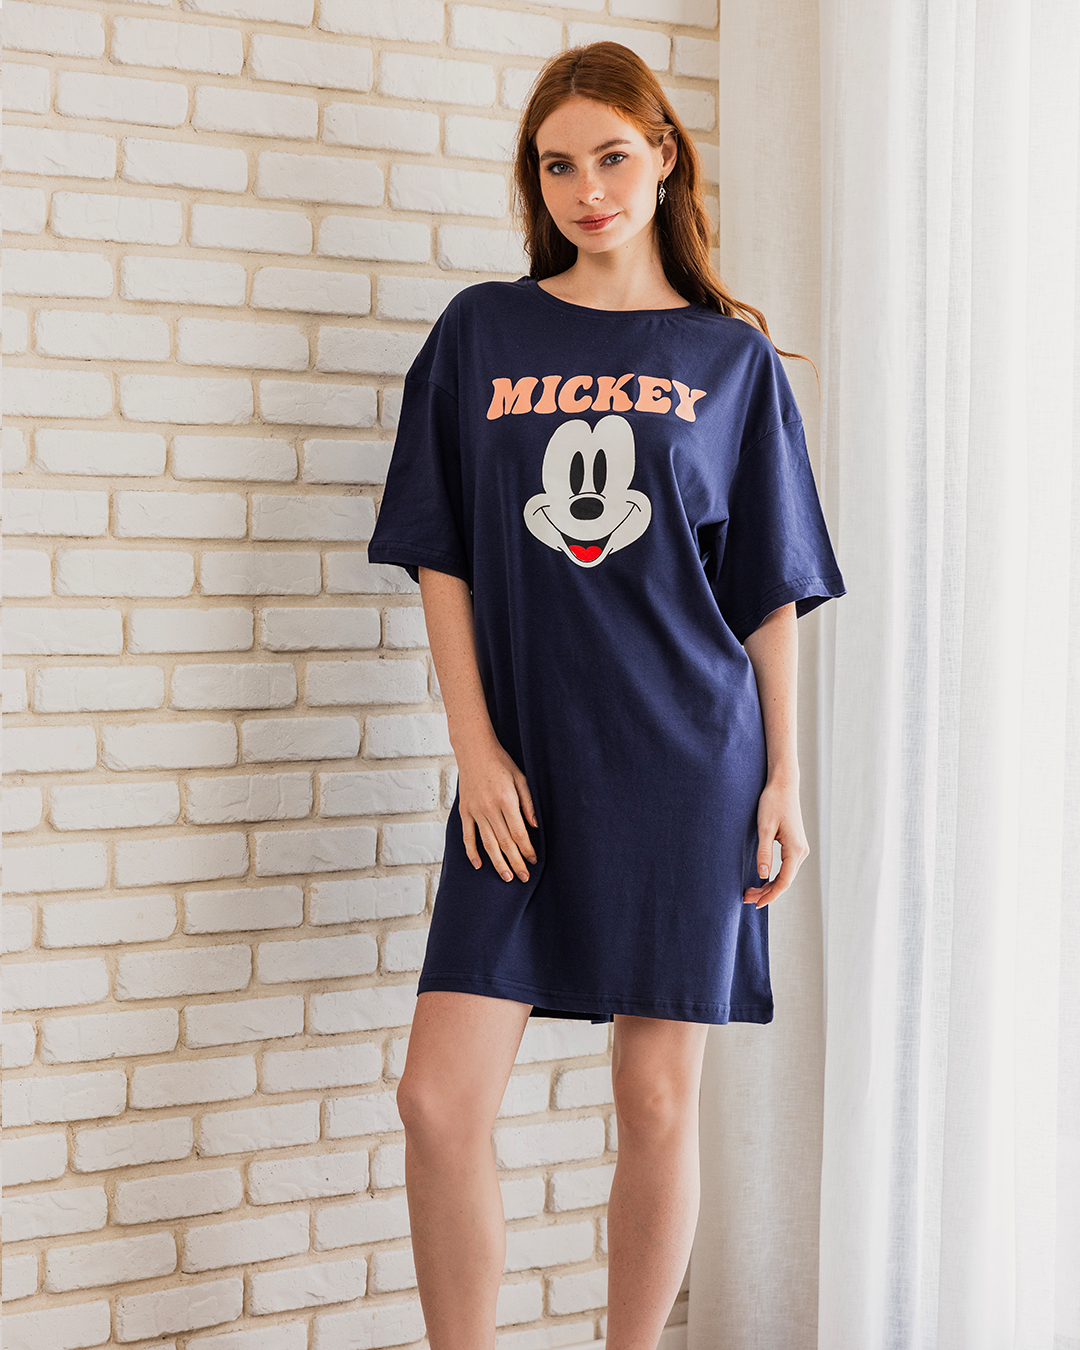 MICKEY Women's Night Shirt, Half Short Sleeve